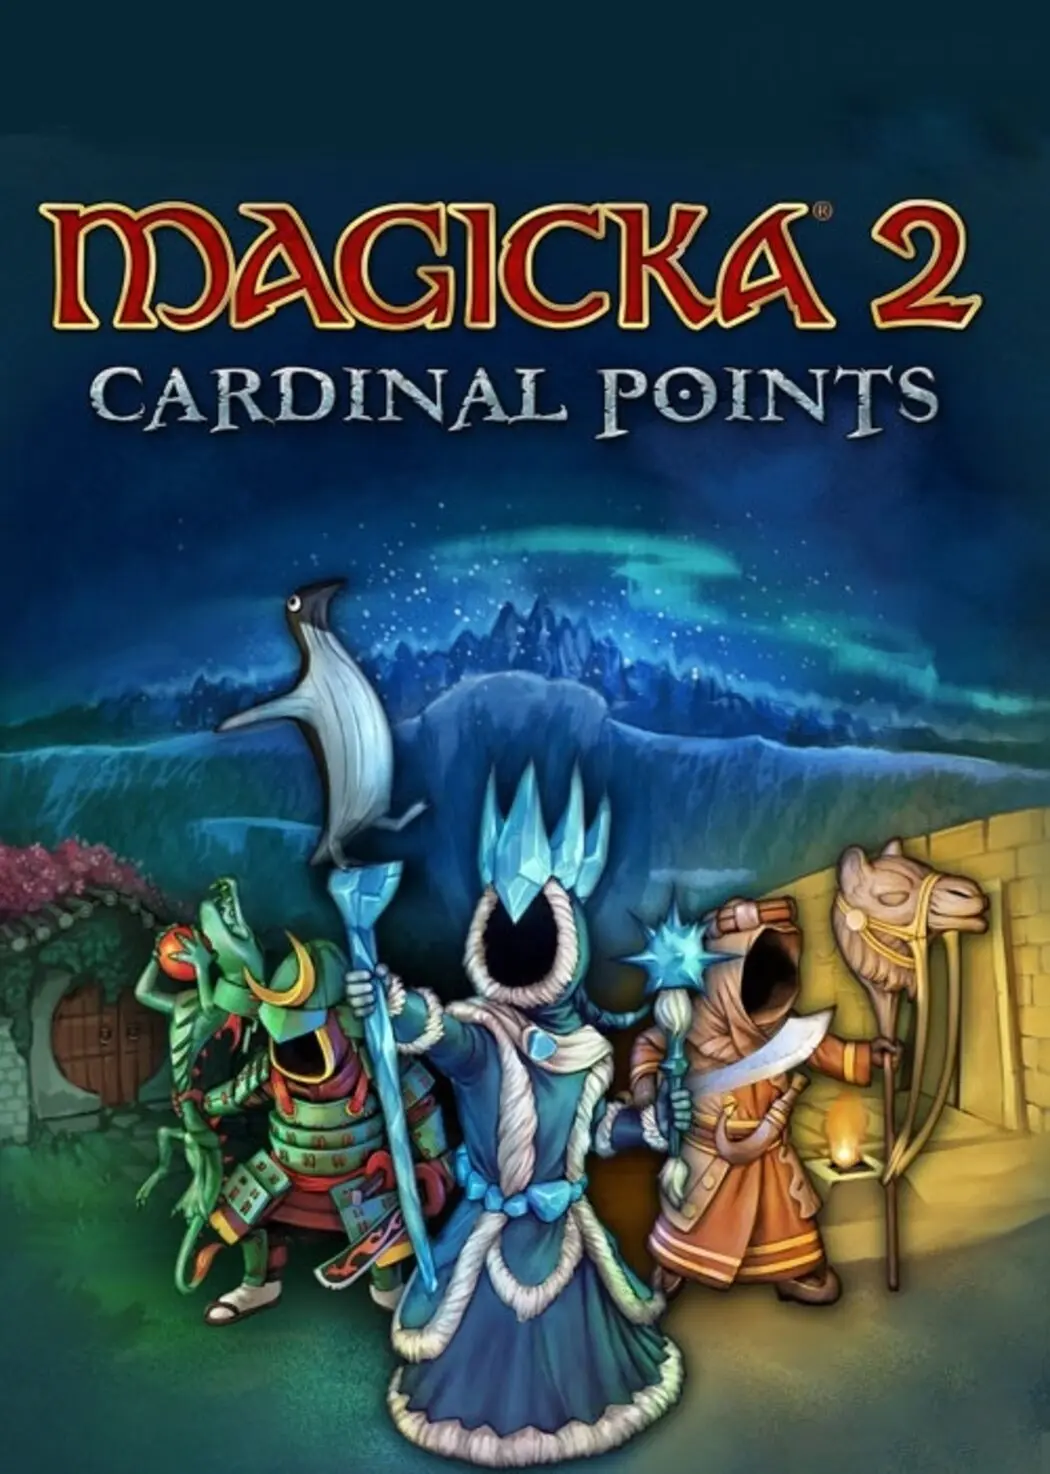 Magicka 2 - Cardinal Points Super Pack DLC (PC) - Steam - Digital Code